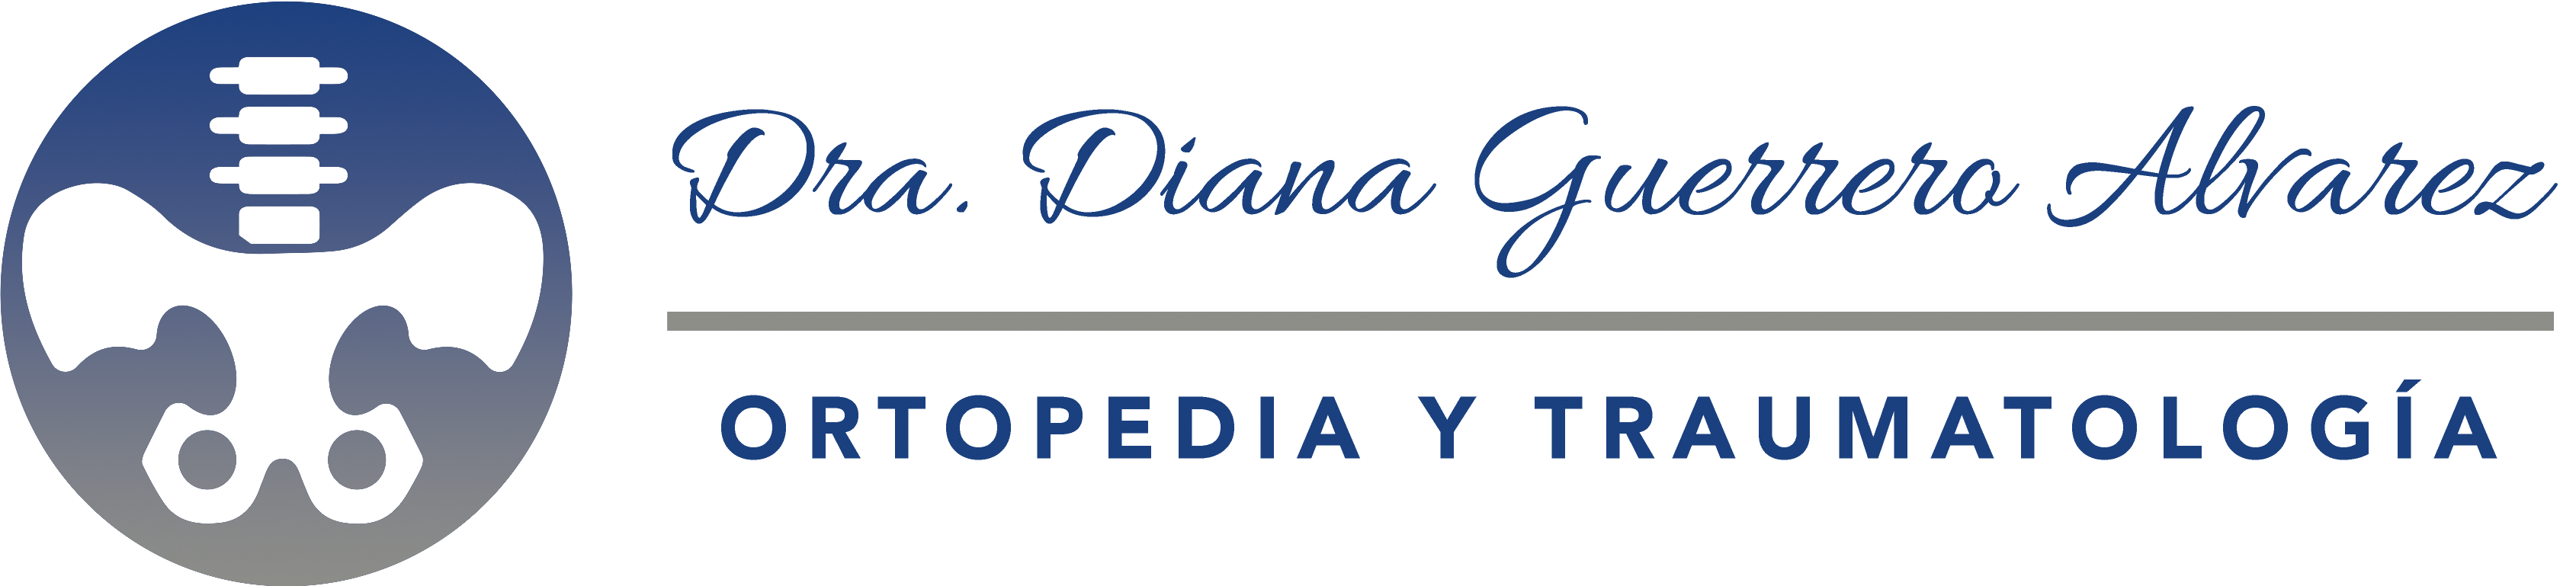 Dra. Diana Guerrero Alvarez | Dra. Diana Guerrero Alvarez